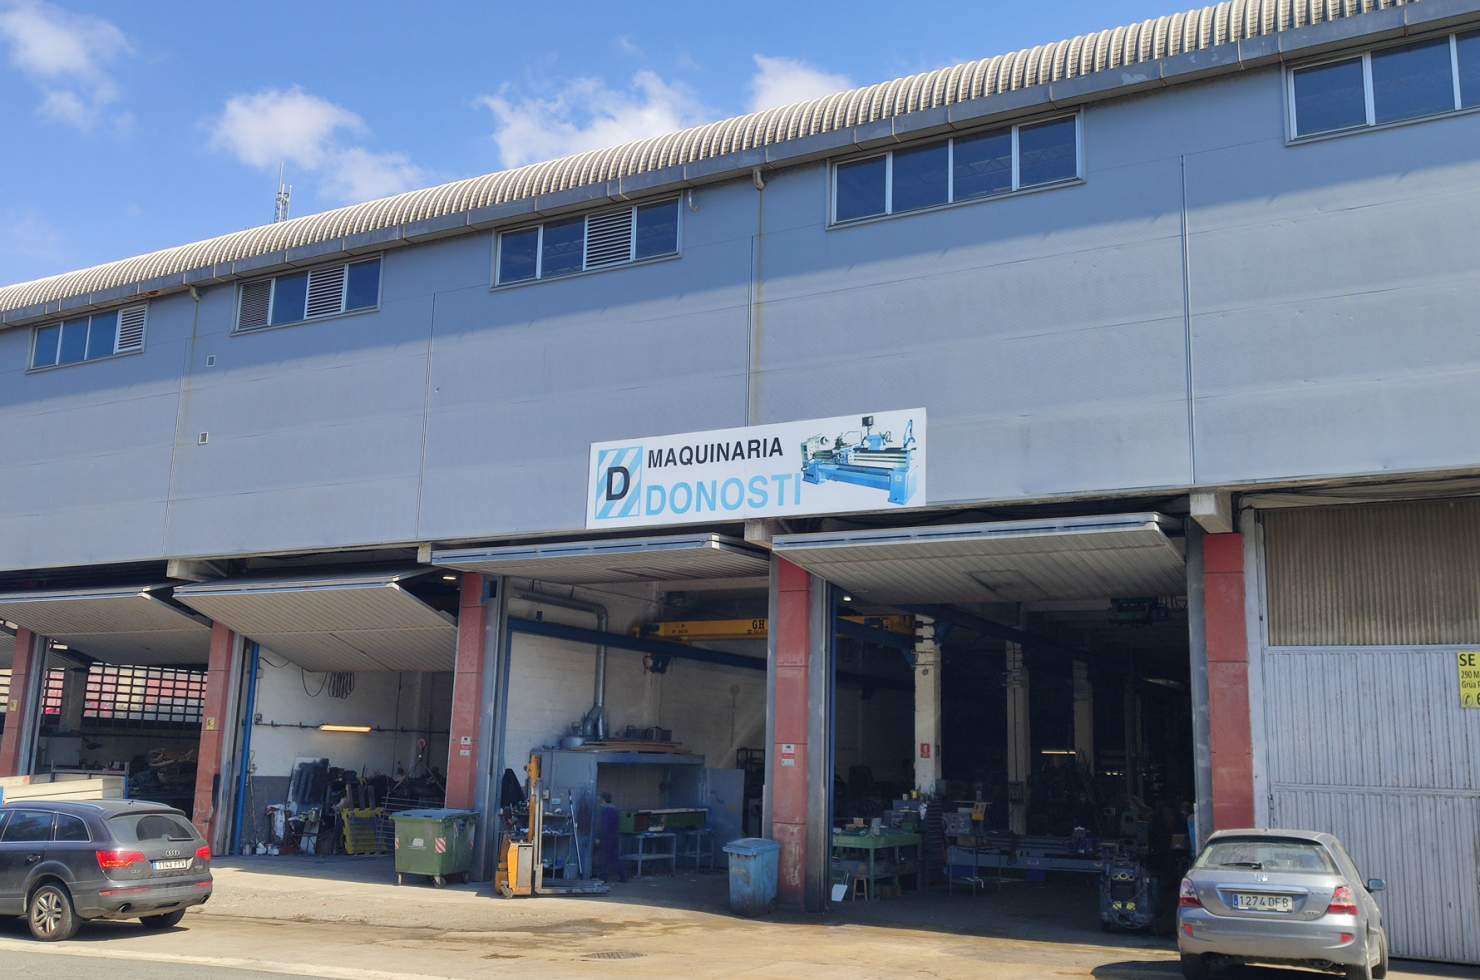 Maquinaria Donosti warehouse in San Sebastian